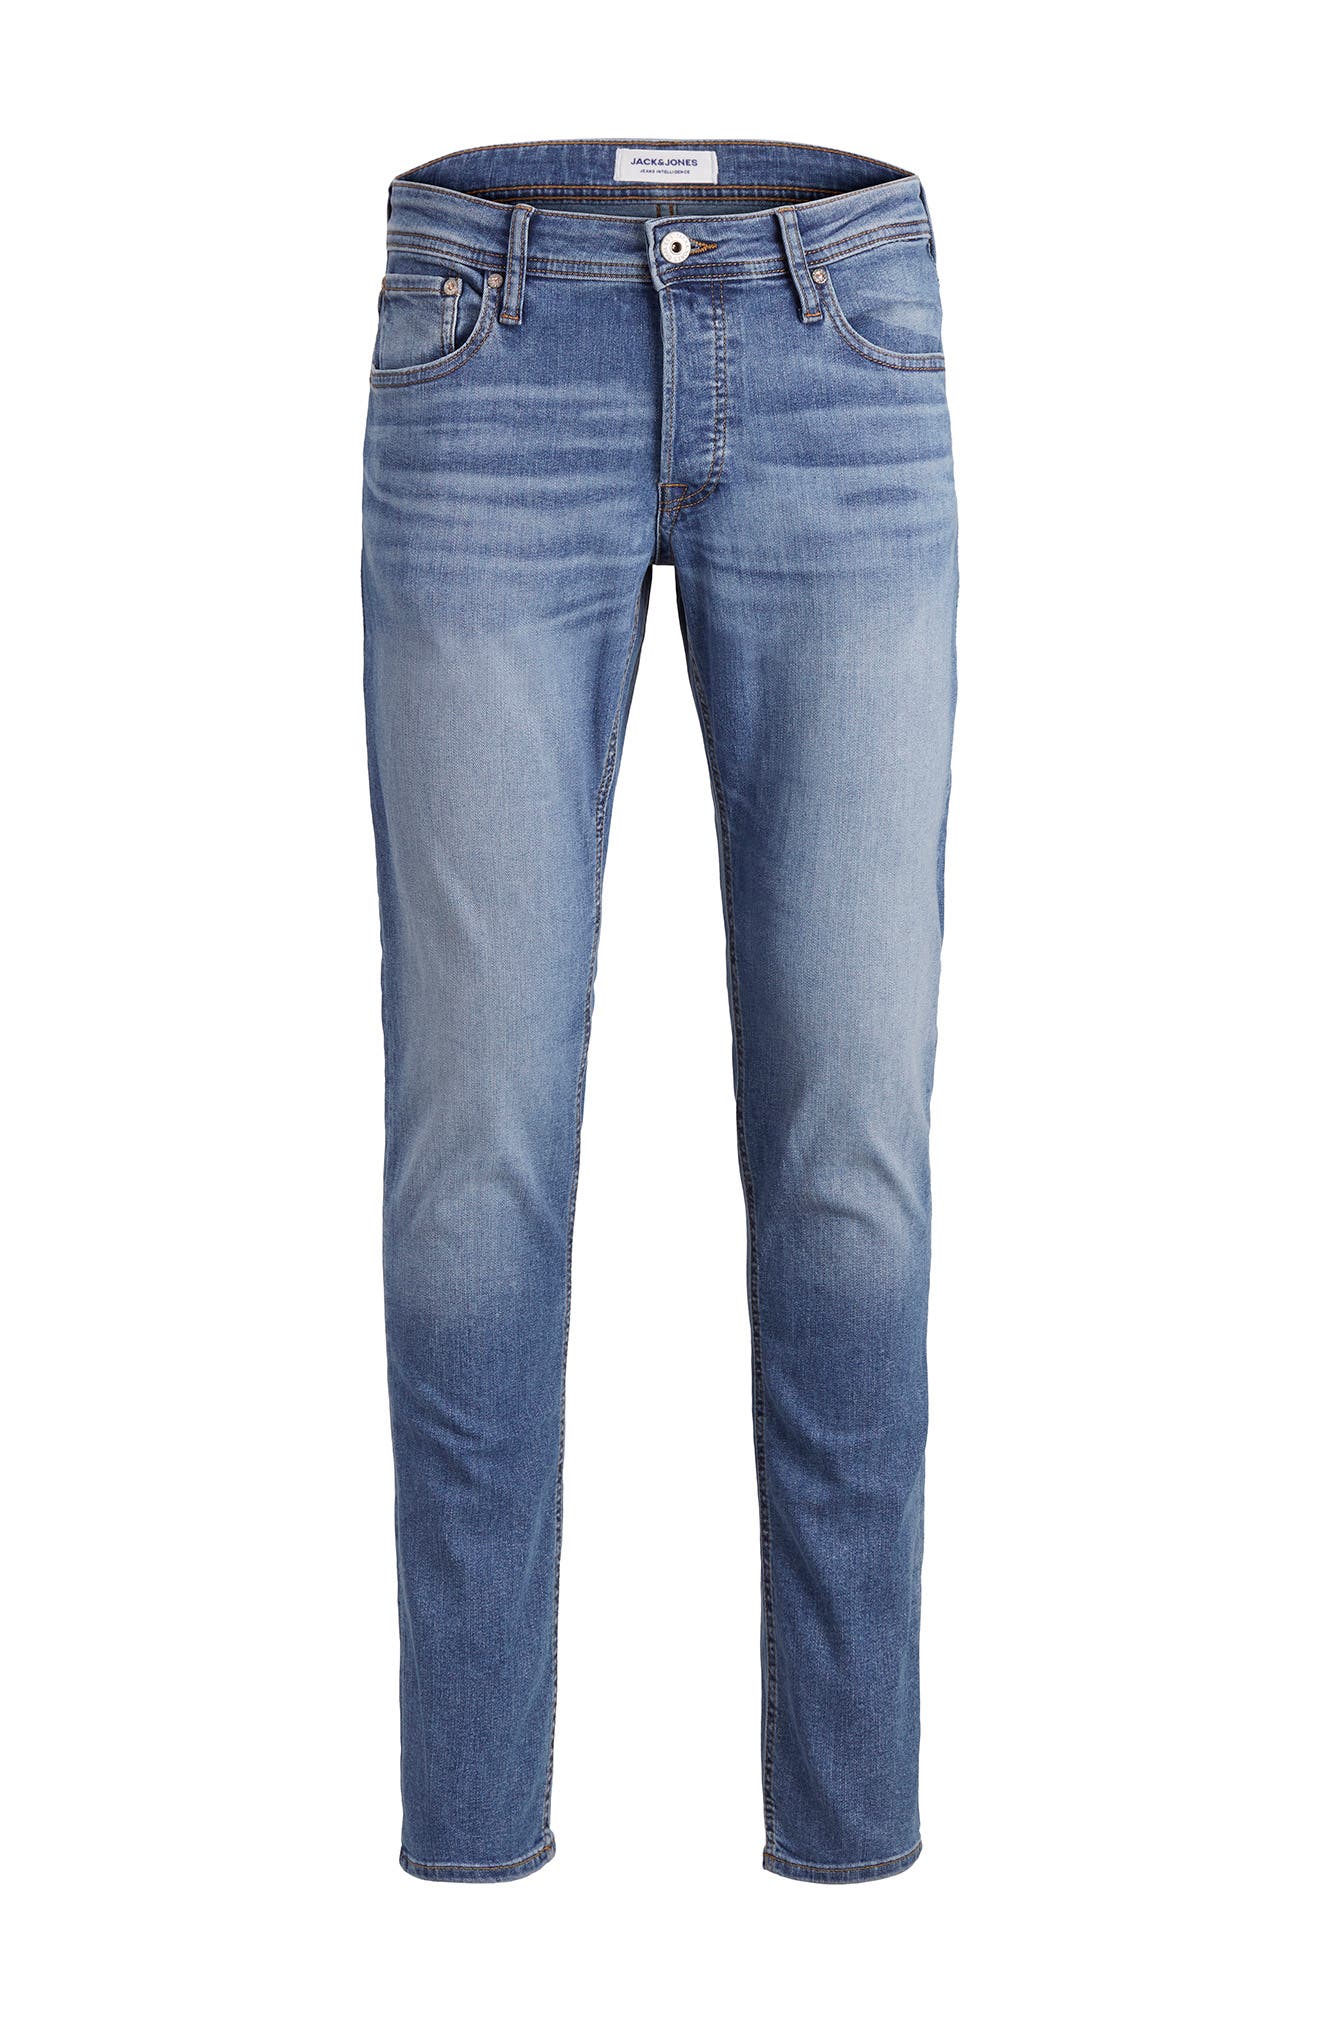 Jack & Jones Jiglenn Original Slim Fit Jeans In Medium Blue5